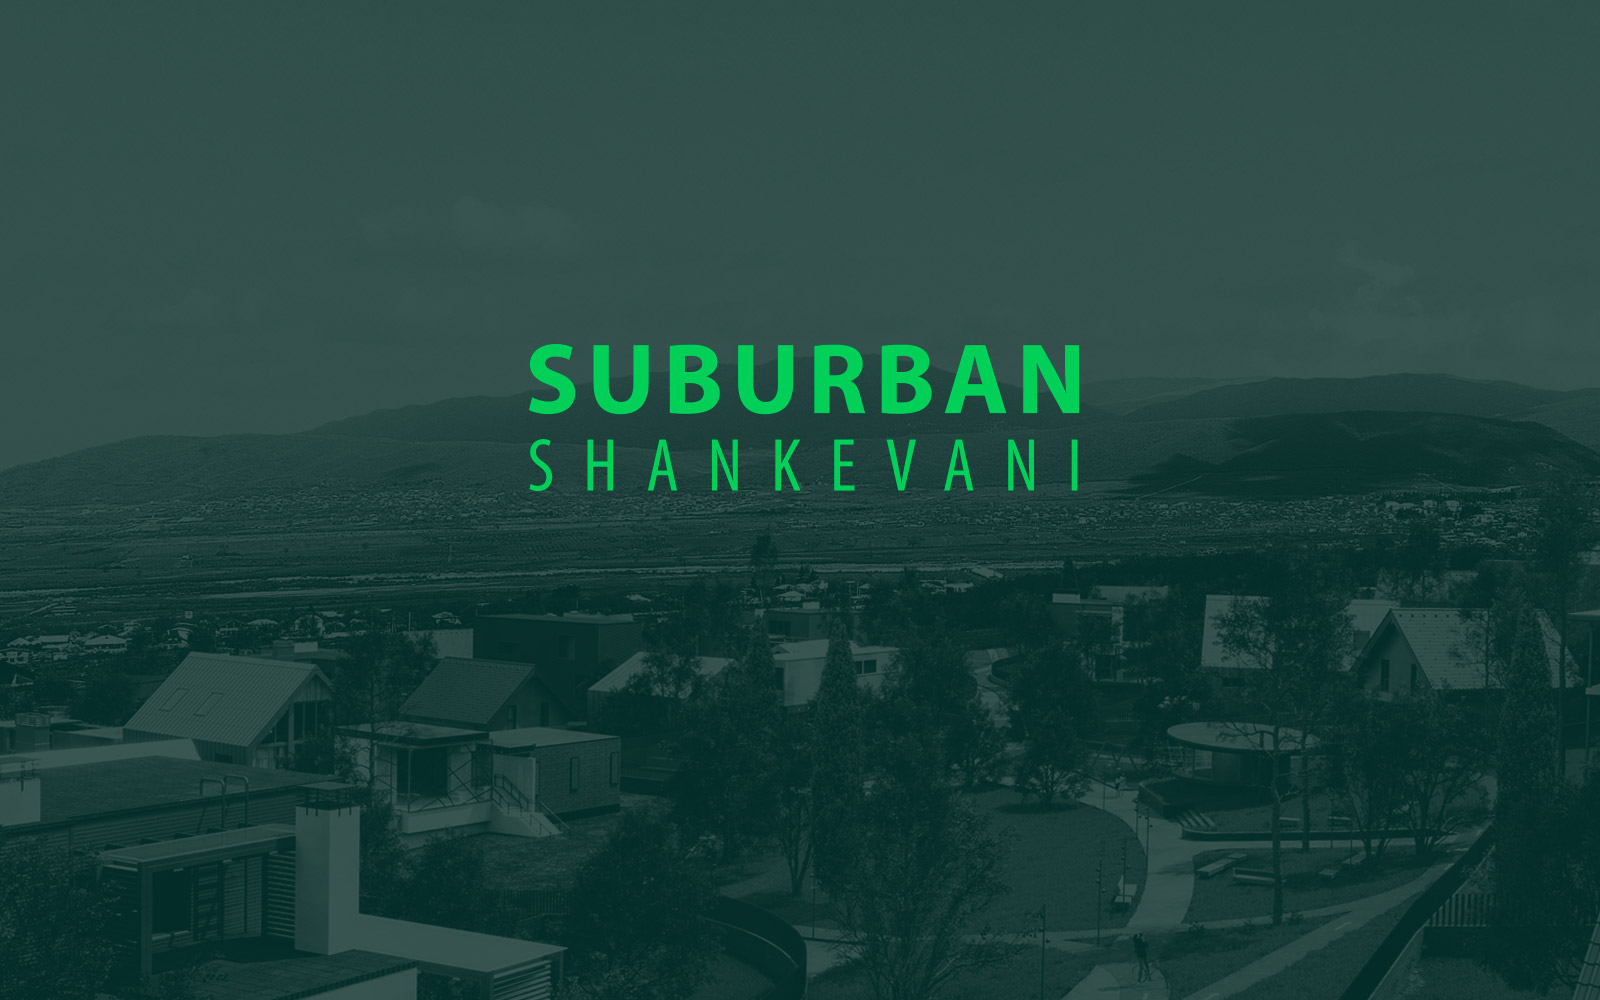 Shankevani